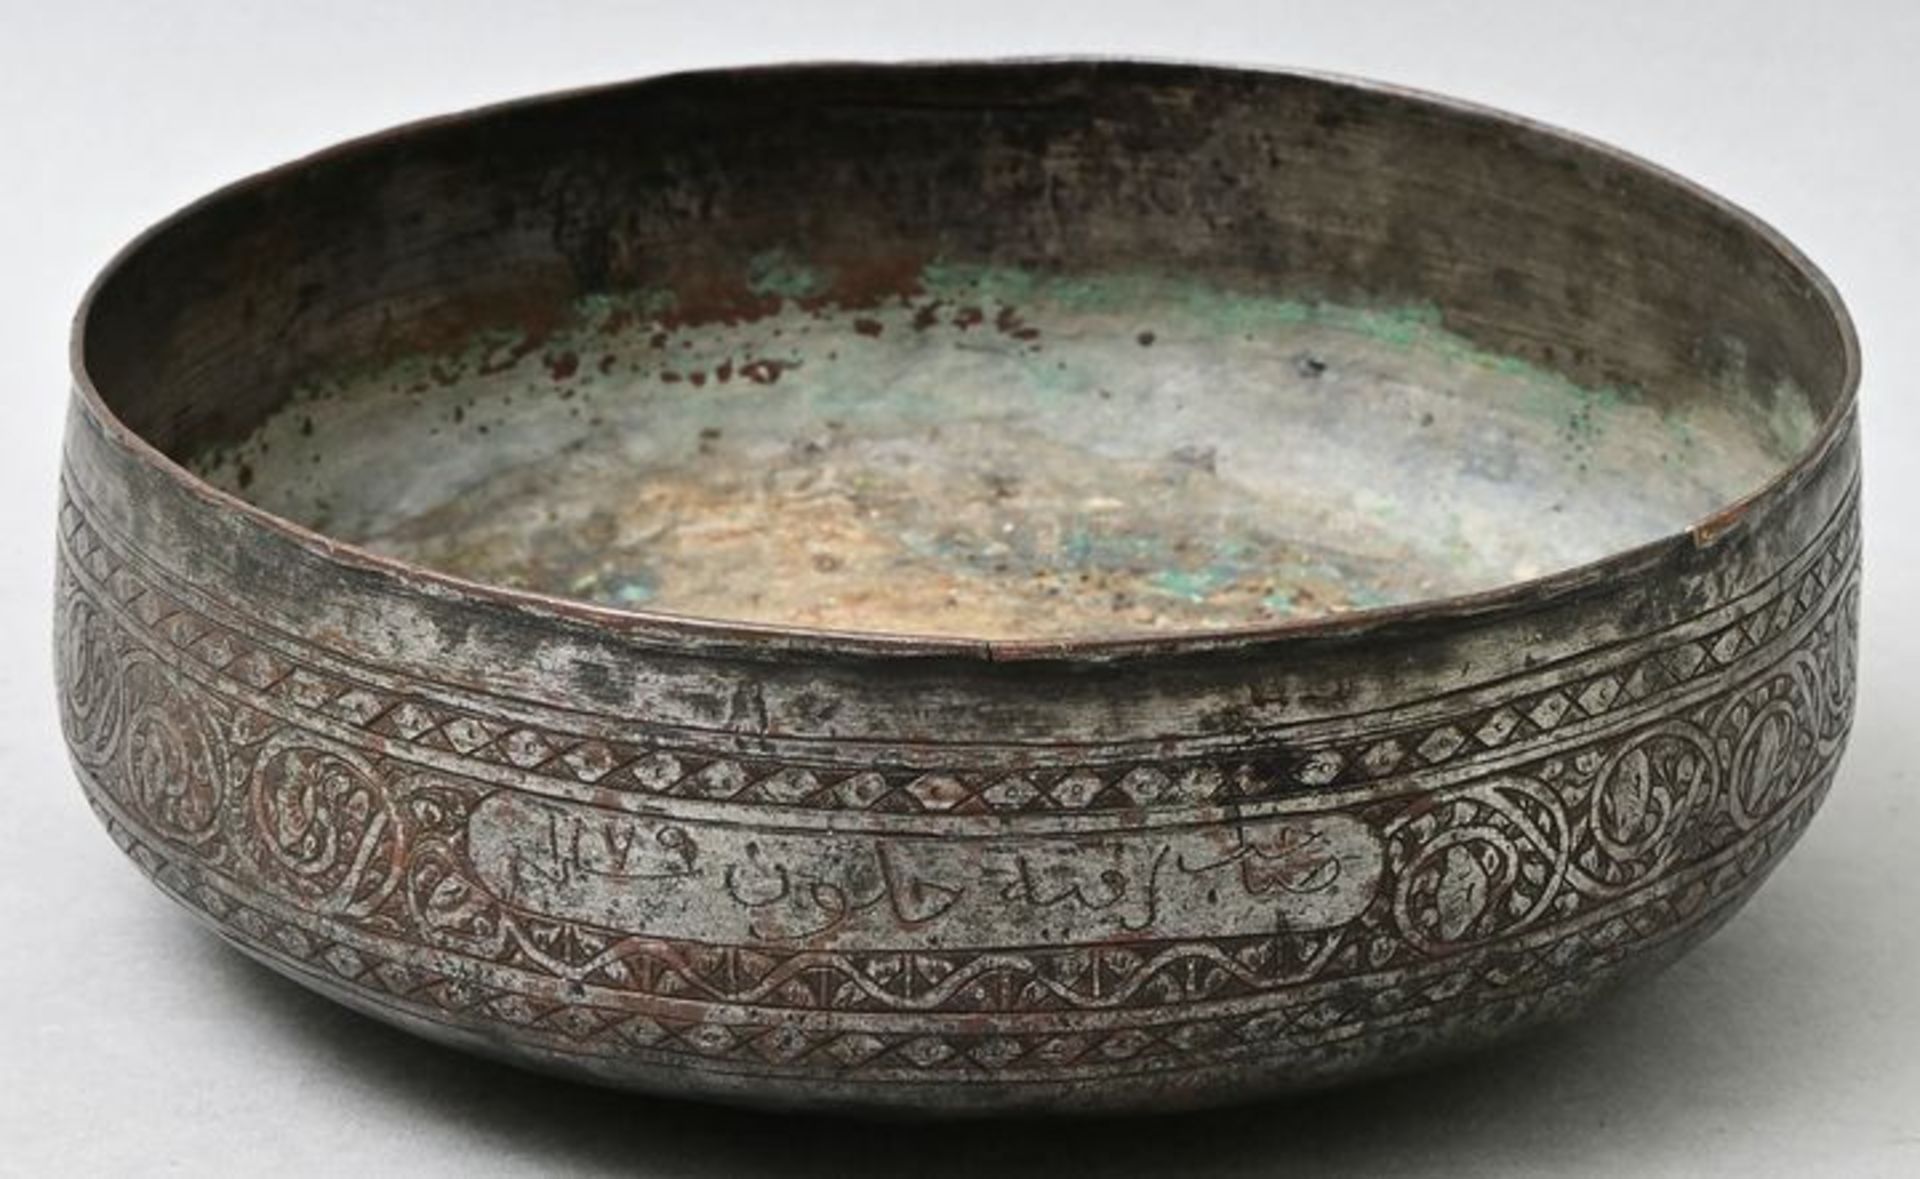 Hamam-Schale/ Ottoman bathing bowl